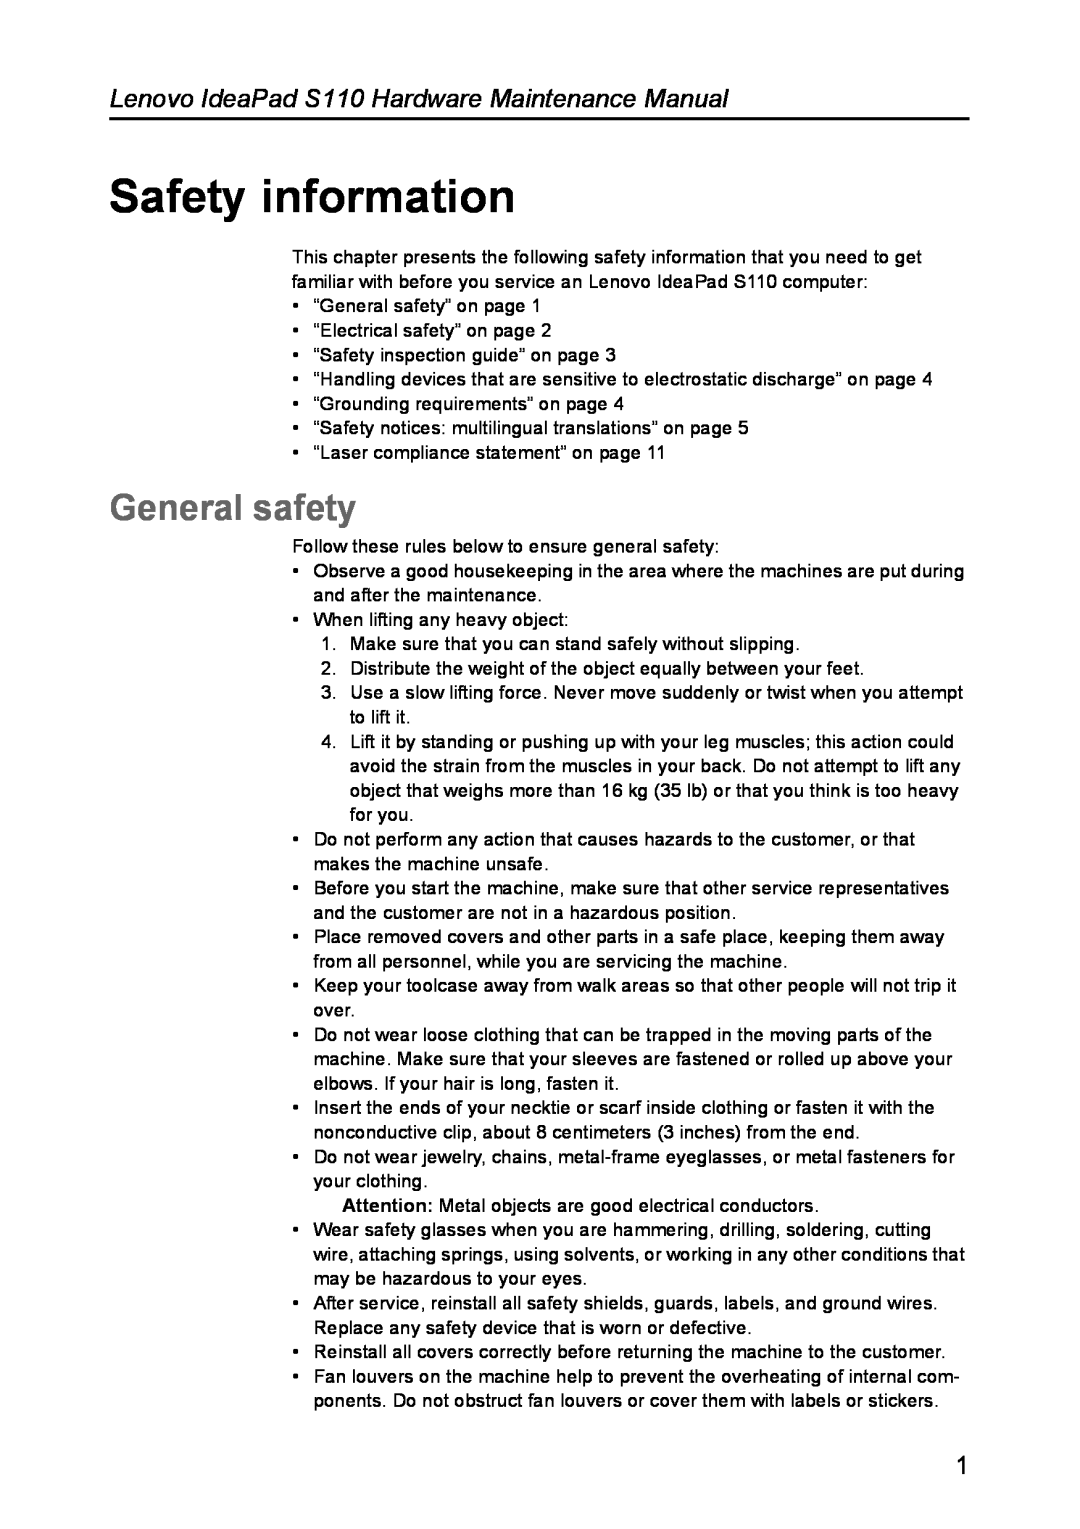 Lenovo manual Safety information, General safety, Lenovo IdeaPad S110 Hardware Maintenance Manual 